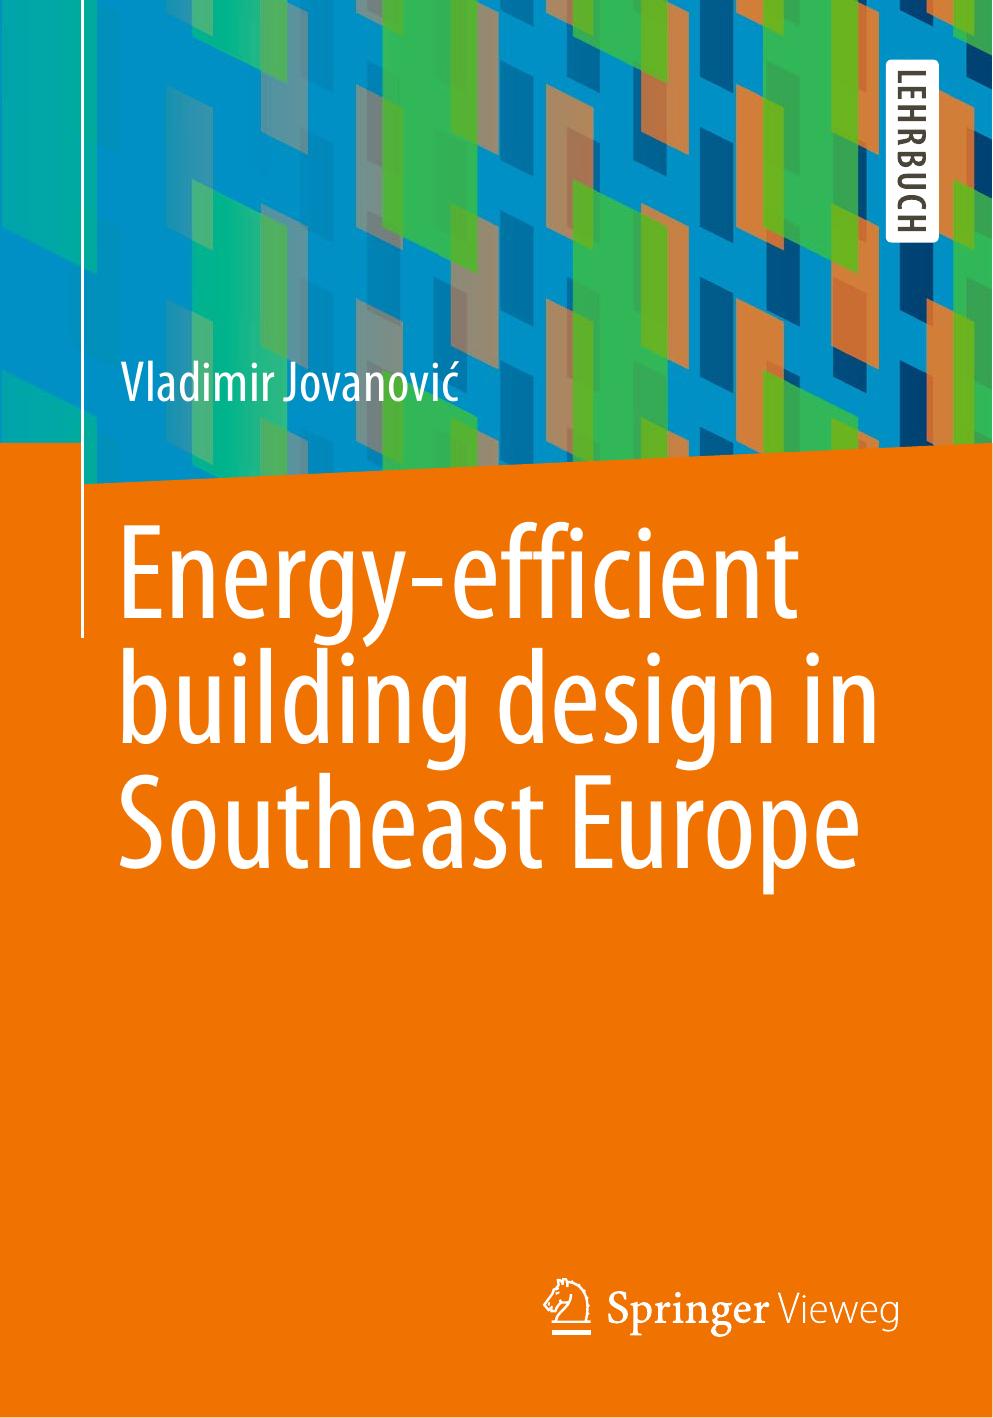 Energy-efficient building design in Southeast Europe by Vladimir Jovanović